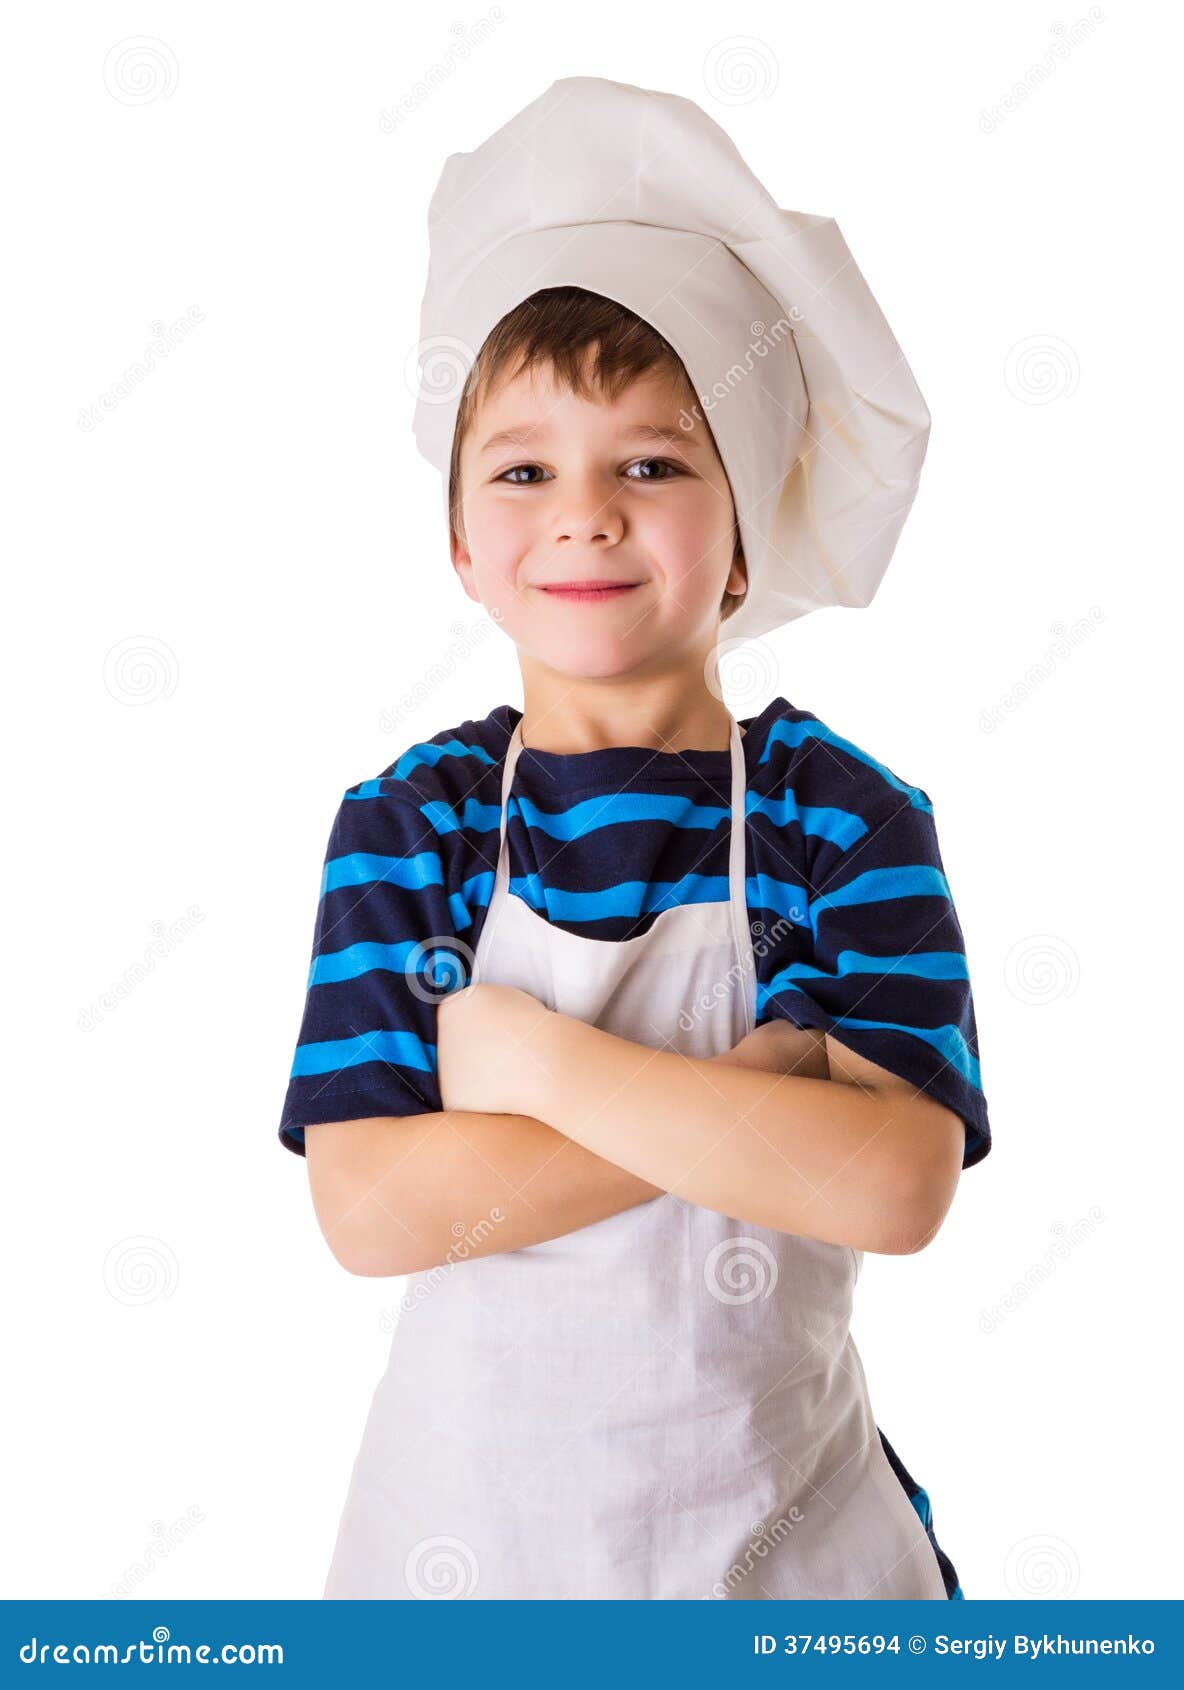 glad little chef